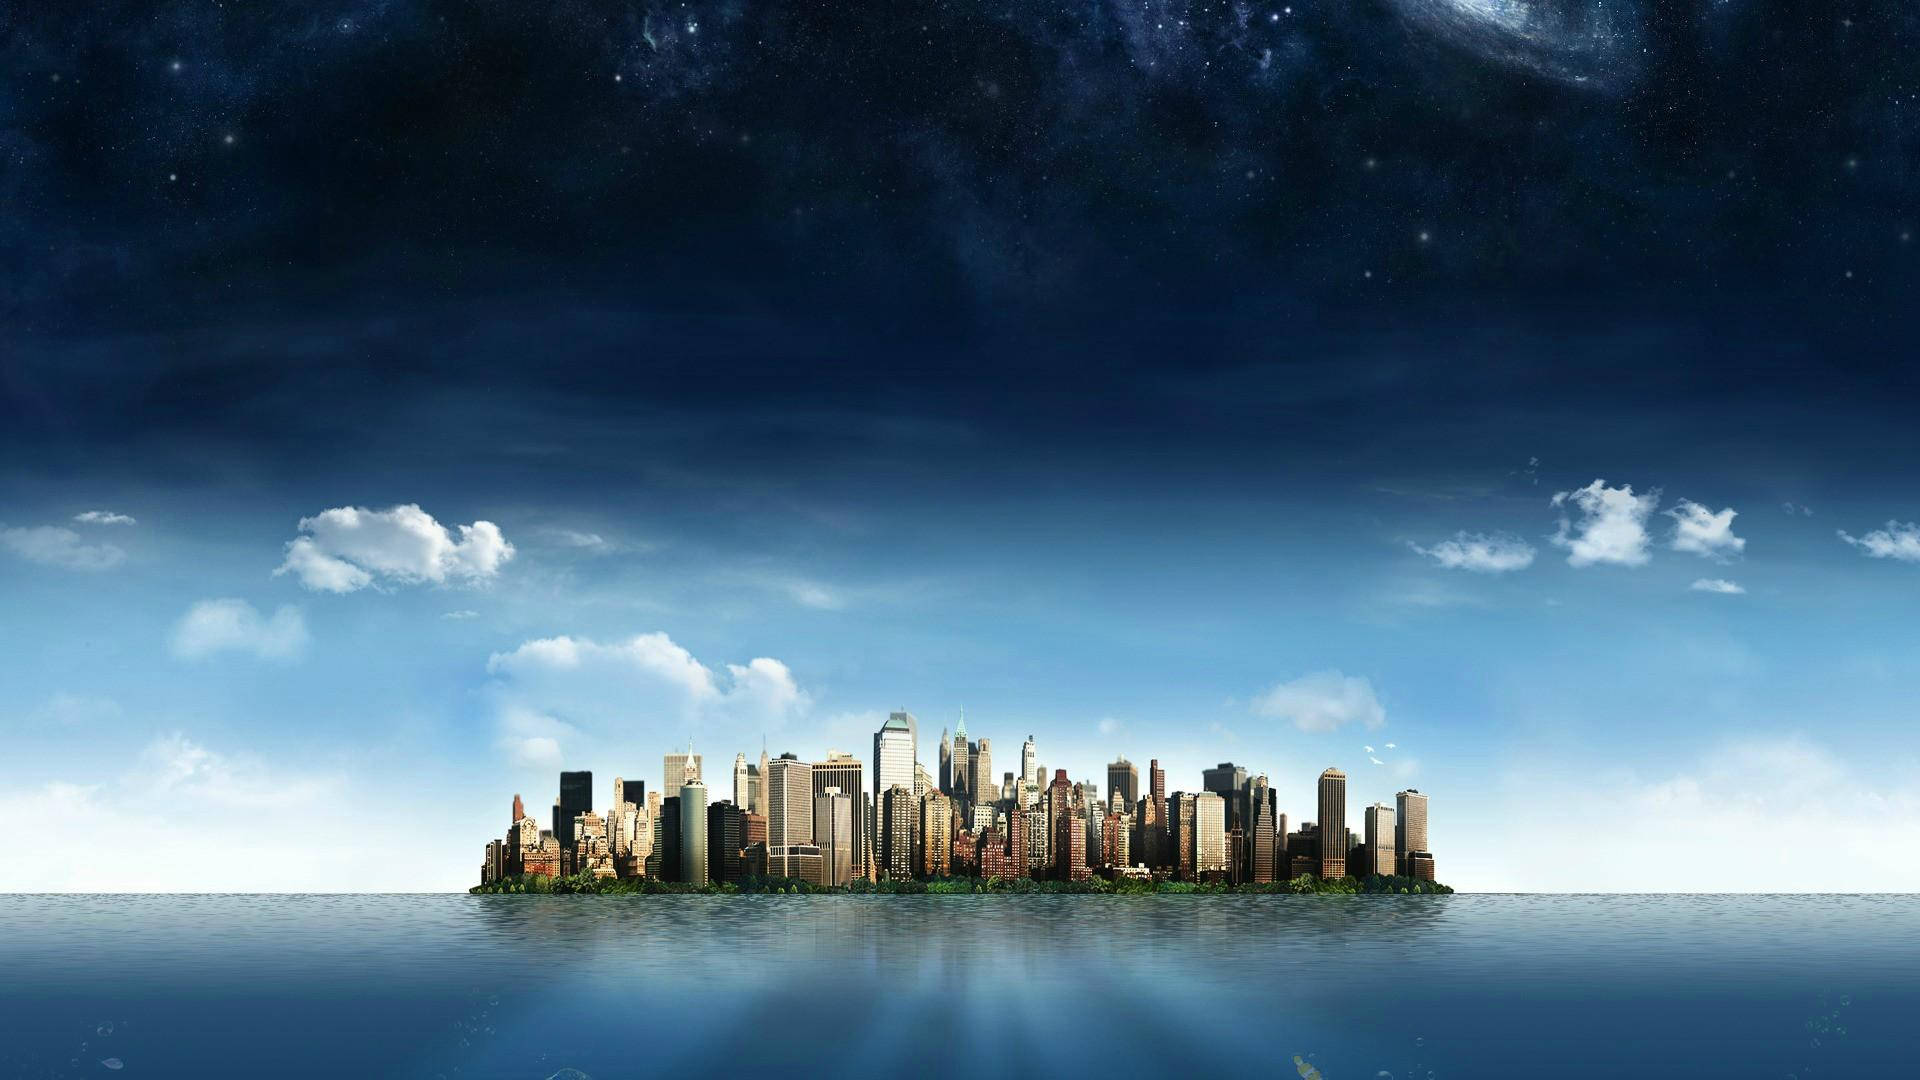 1080p Hd City On Island Under Sky Background